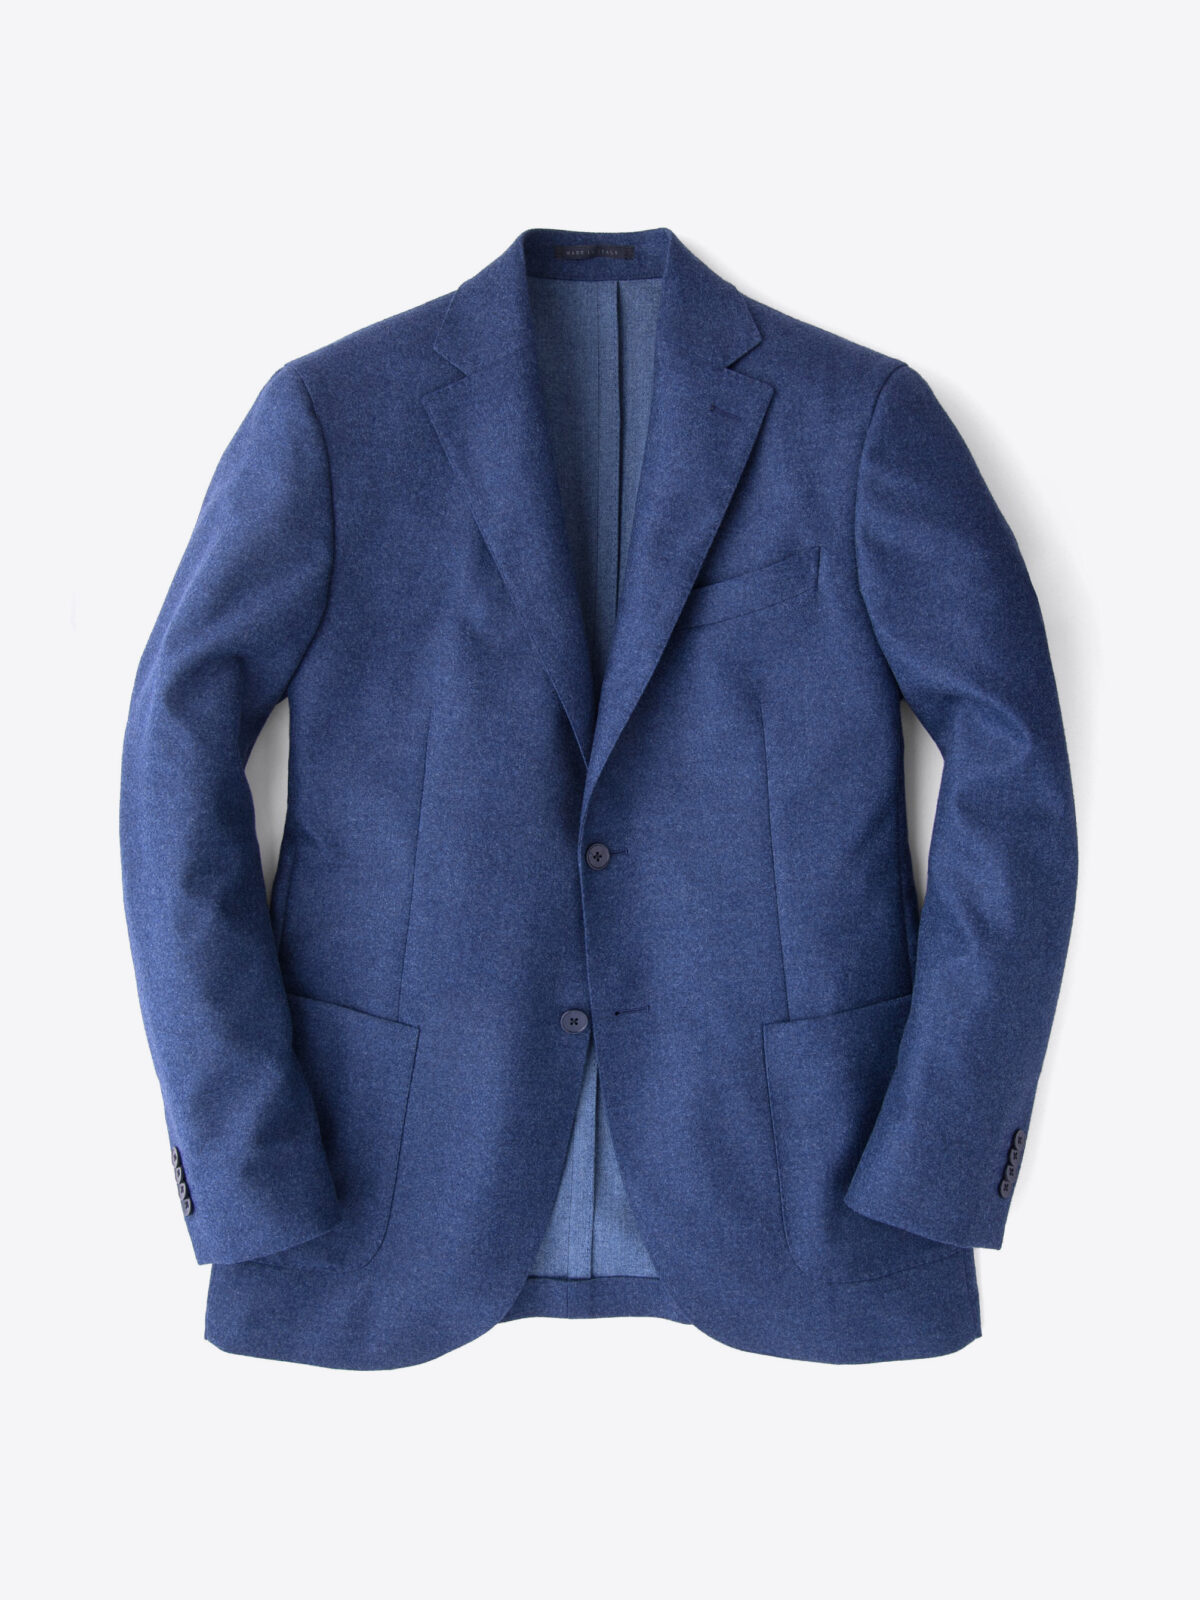 Genova Melange Blue Wool Jacket by Proper Cloth